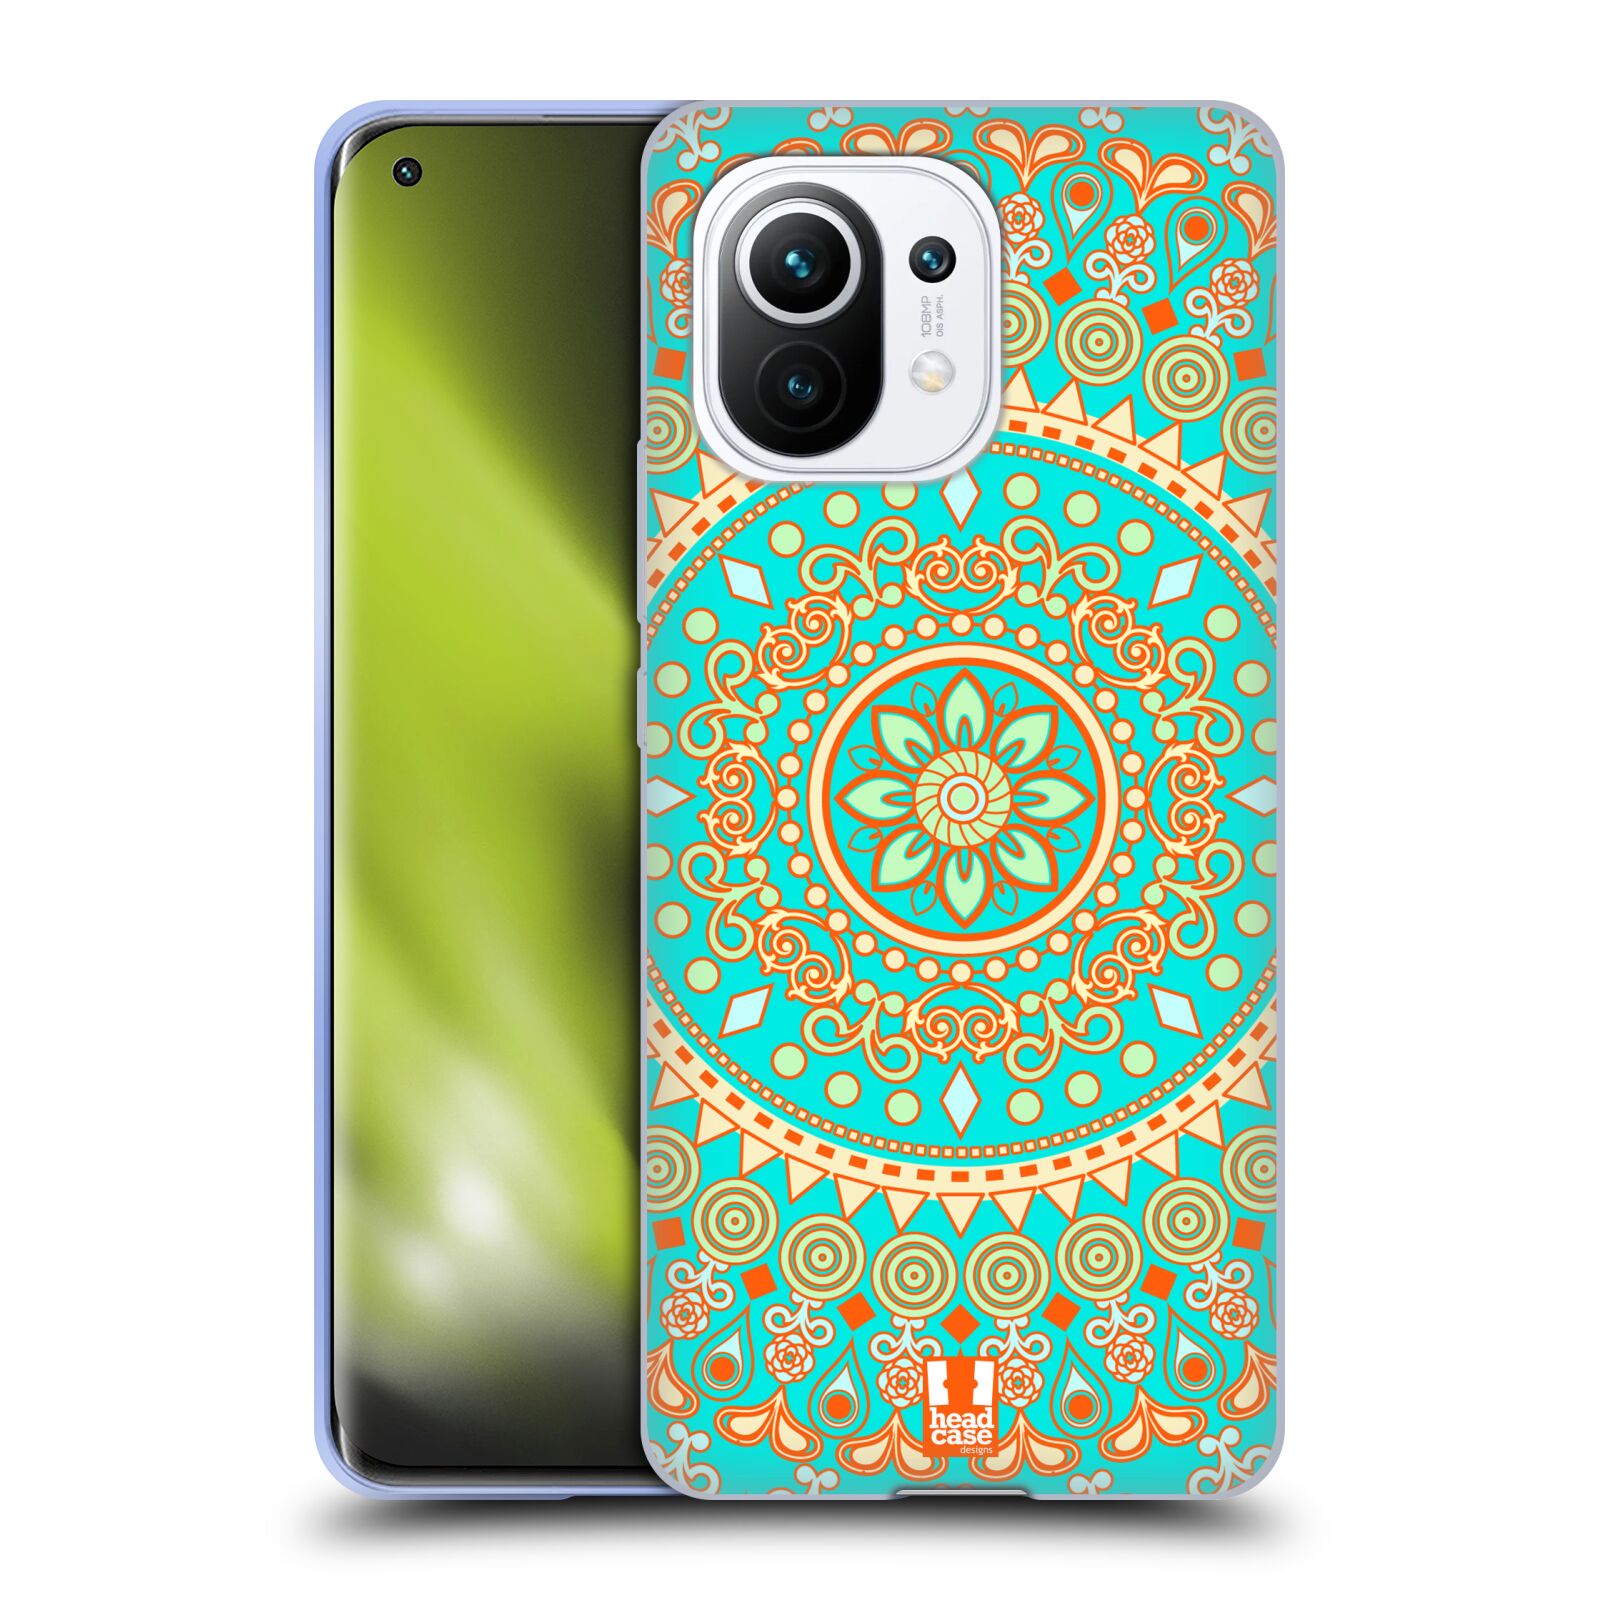 Plastový obal HEAD CASE na mobil Xiaomi Mi 11 vzor Indie Mandala slunce barevný motiv TYRKYSOVÁ, ZELENÁ